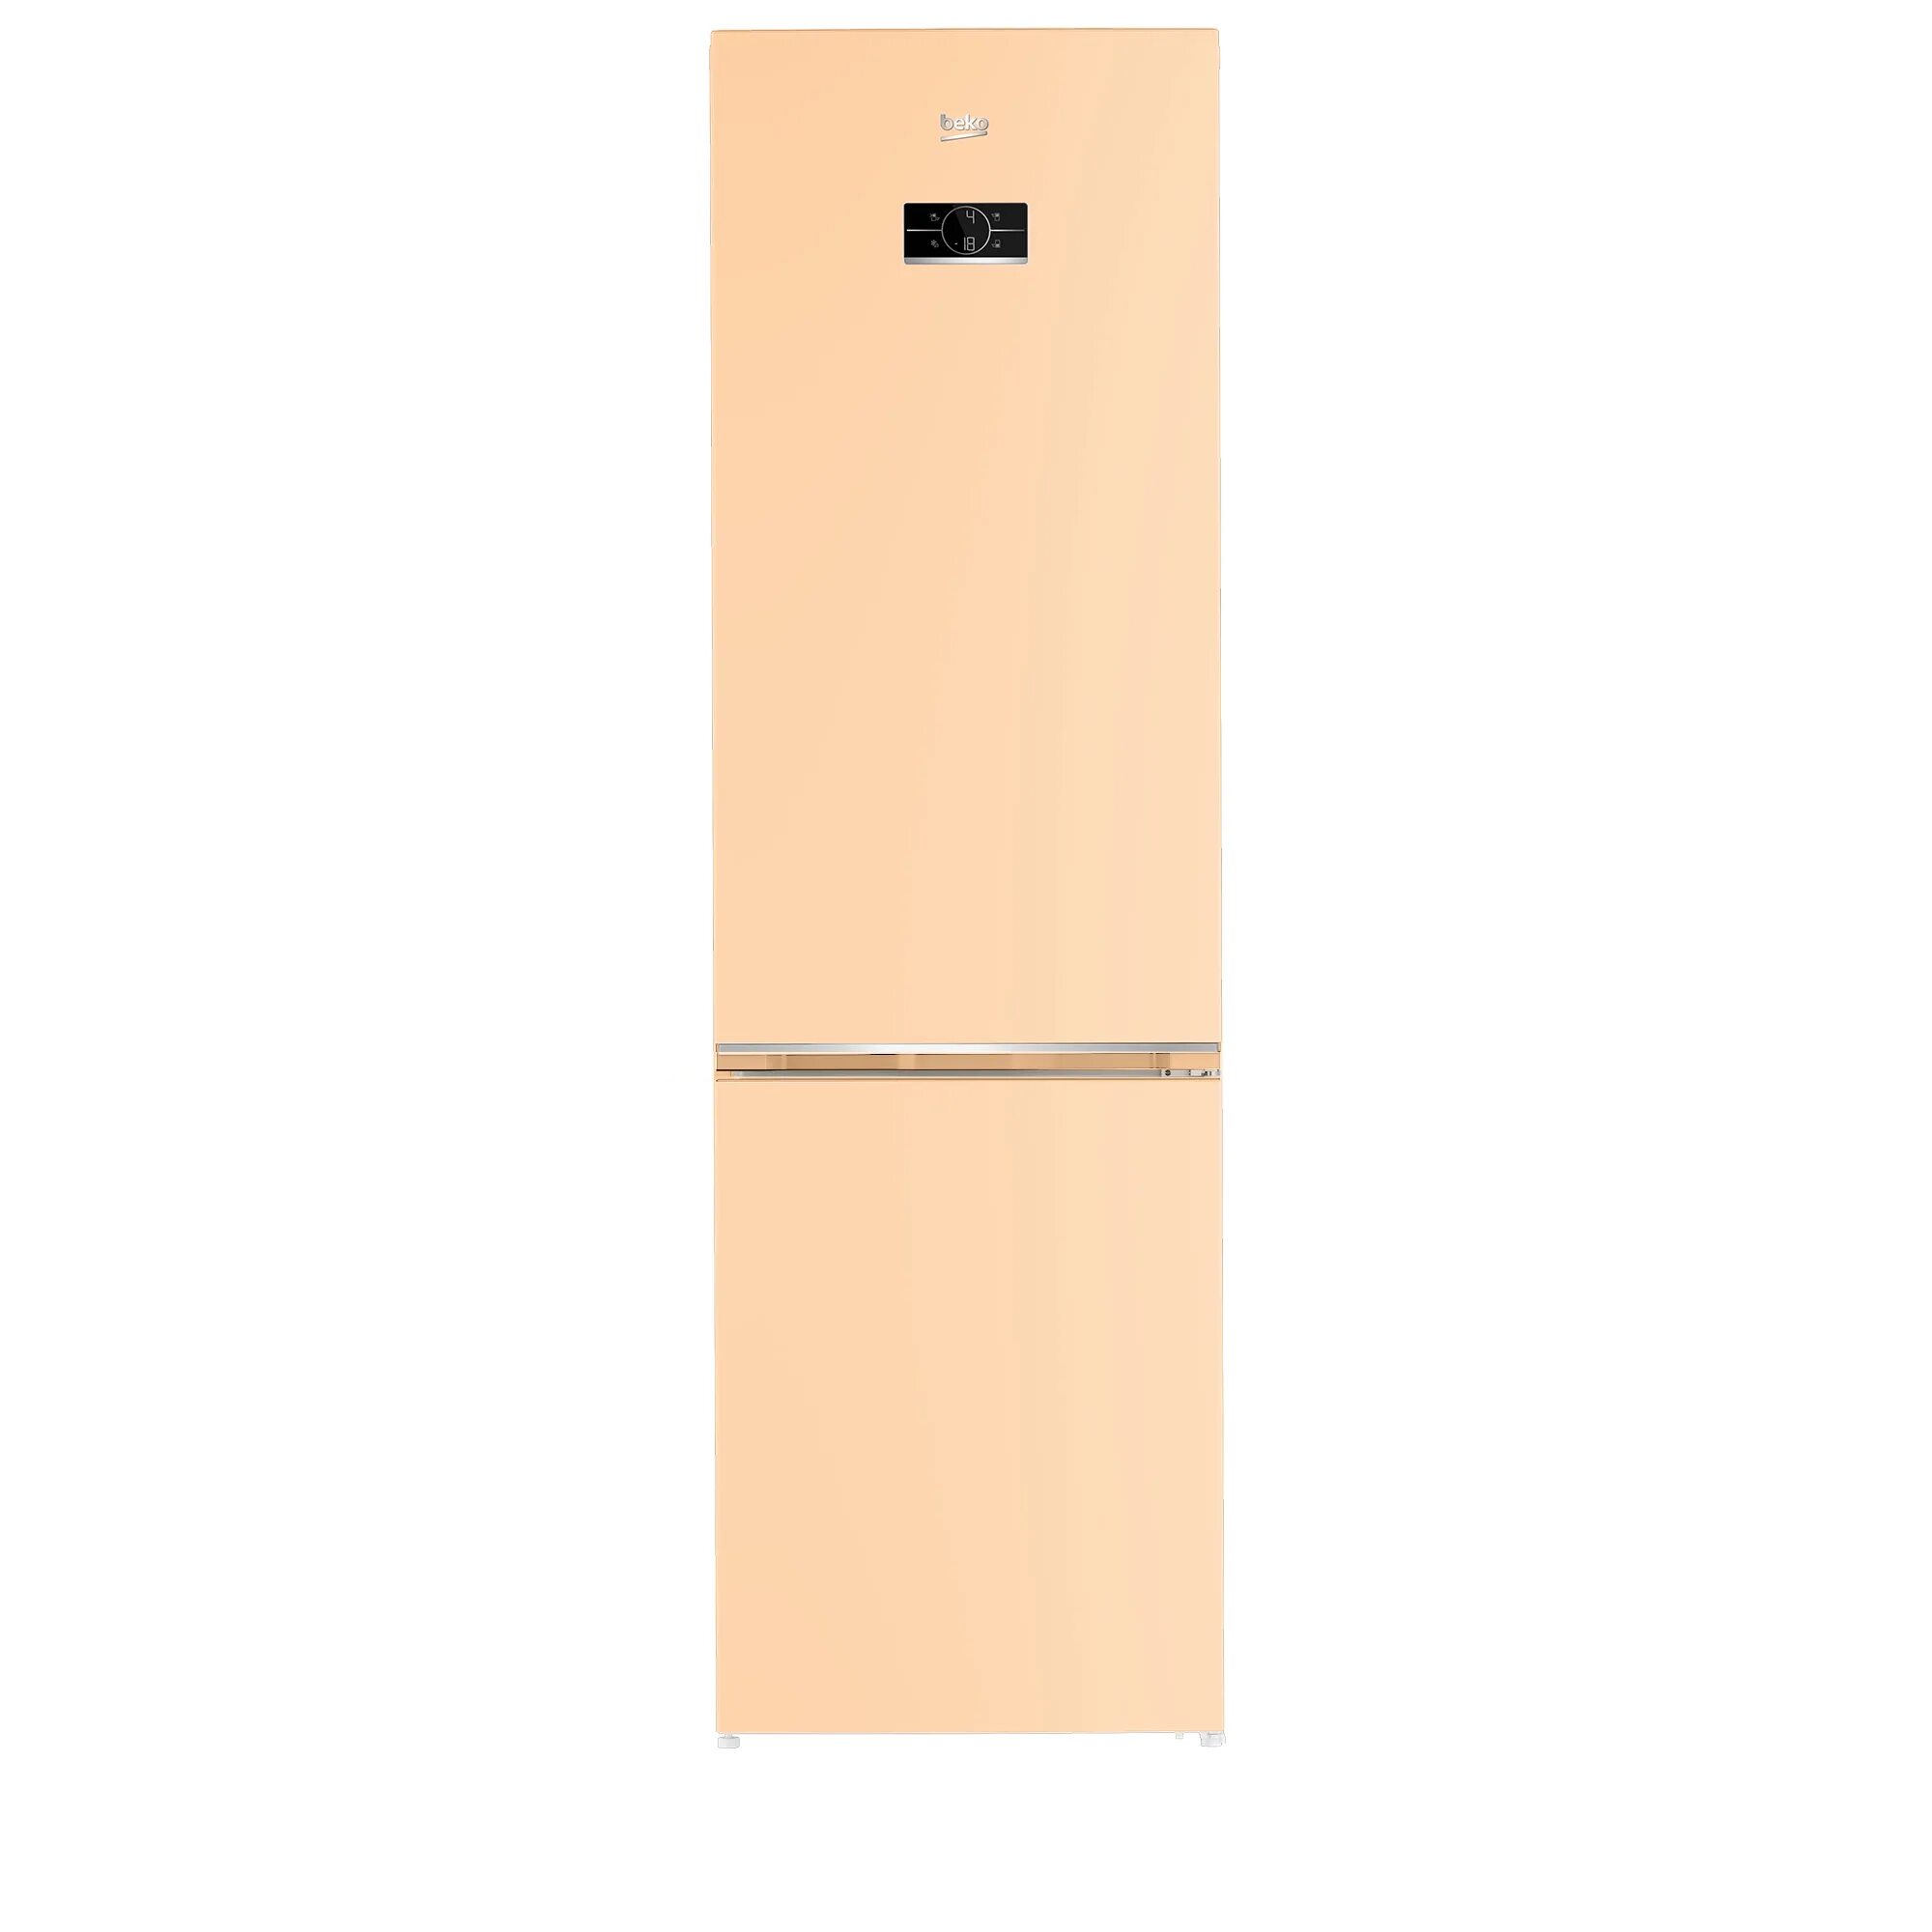 Холодильник LG 509 cetl. Холодильник Jacky's Jr fv1860. Bosch kgn36nk21r. Холодильник Jacky's Jr fs227ms. Узкие холодильники шириной до 50 см